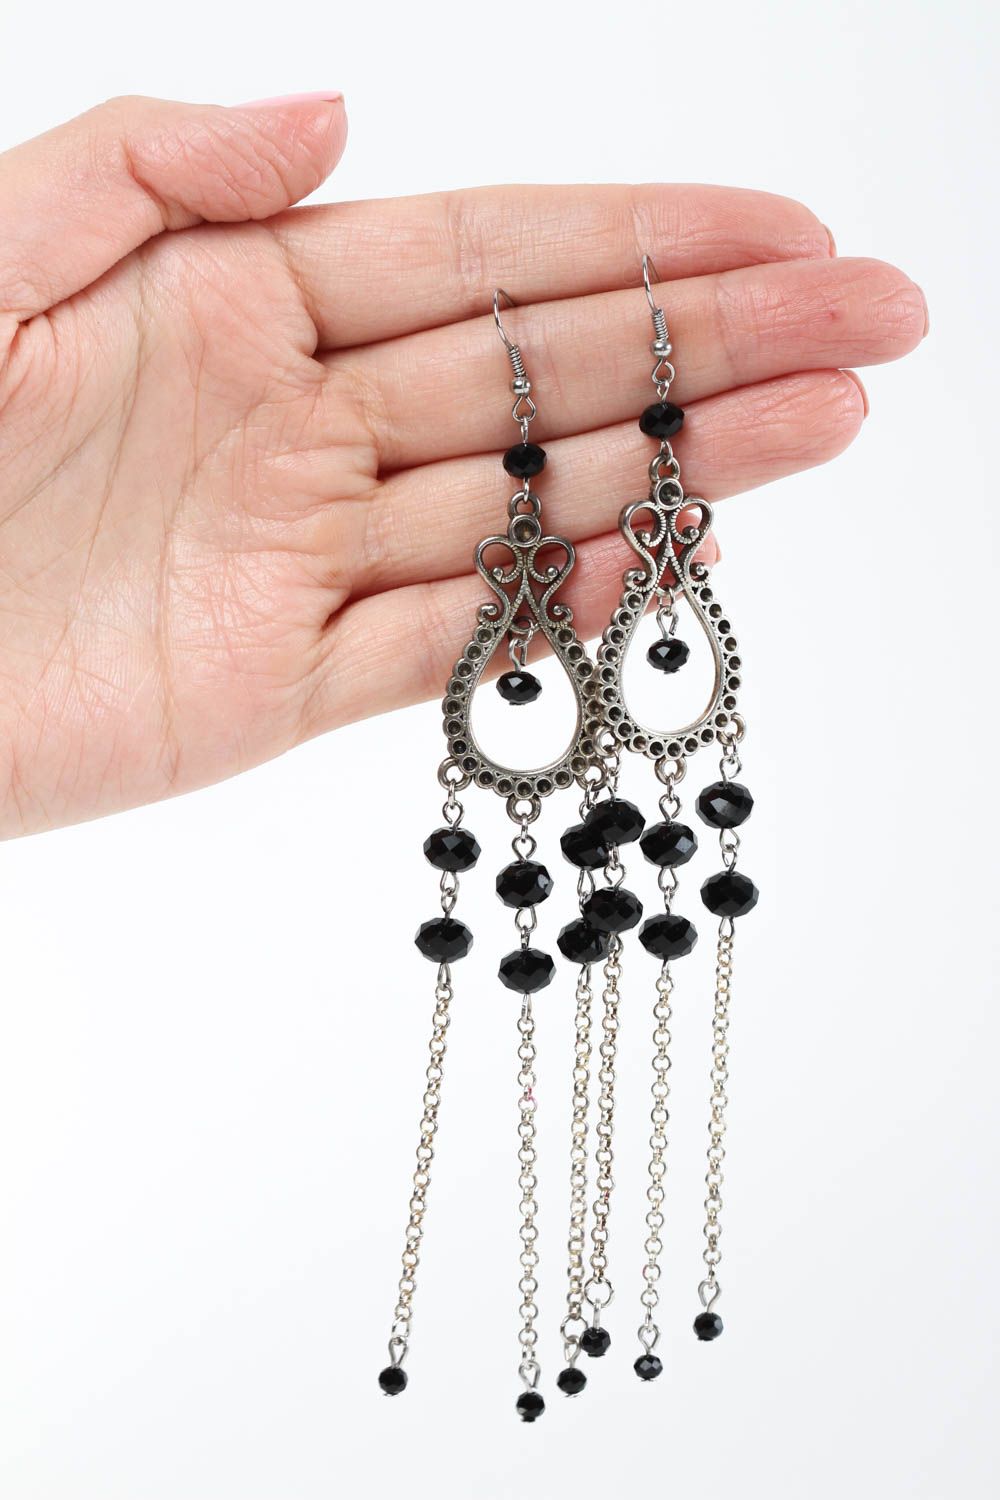 Handmade earrings long earrings designer jewelry fashion accessories gift ideas photo 5